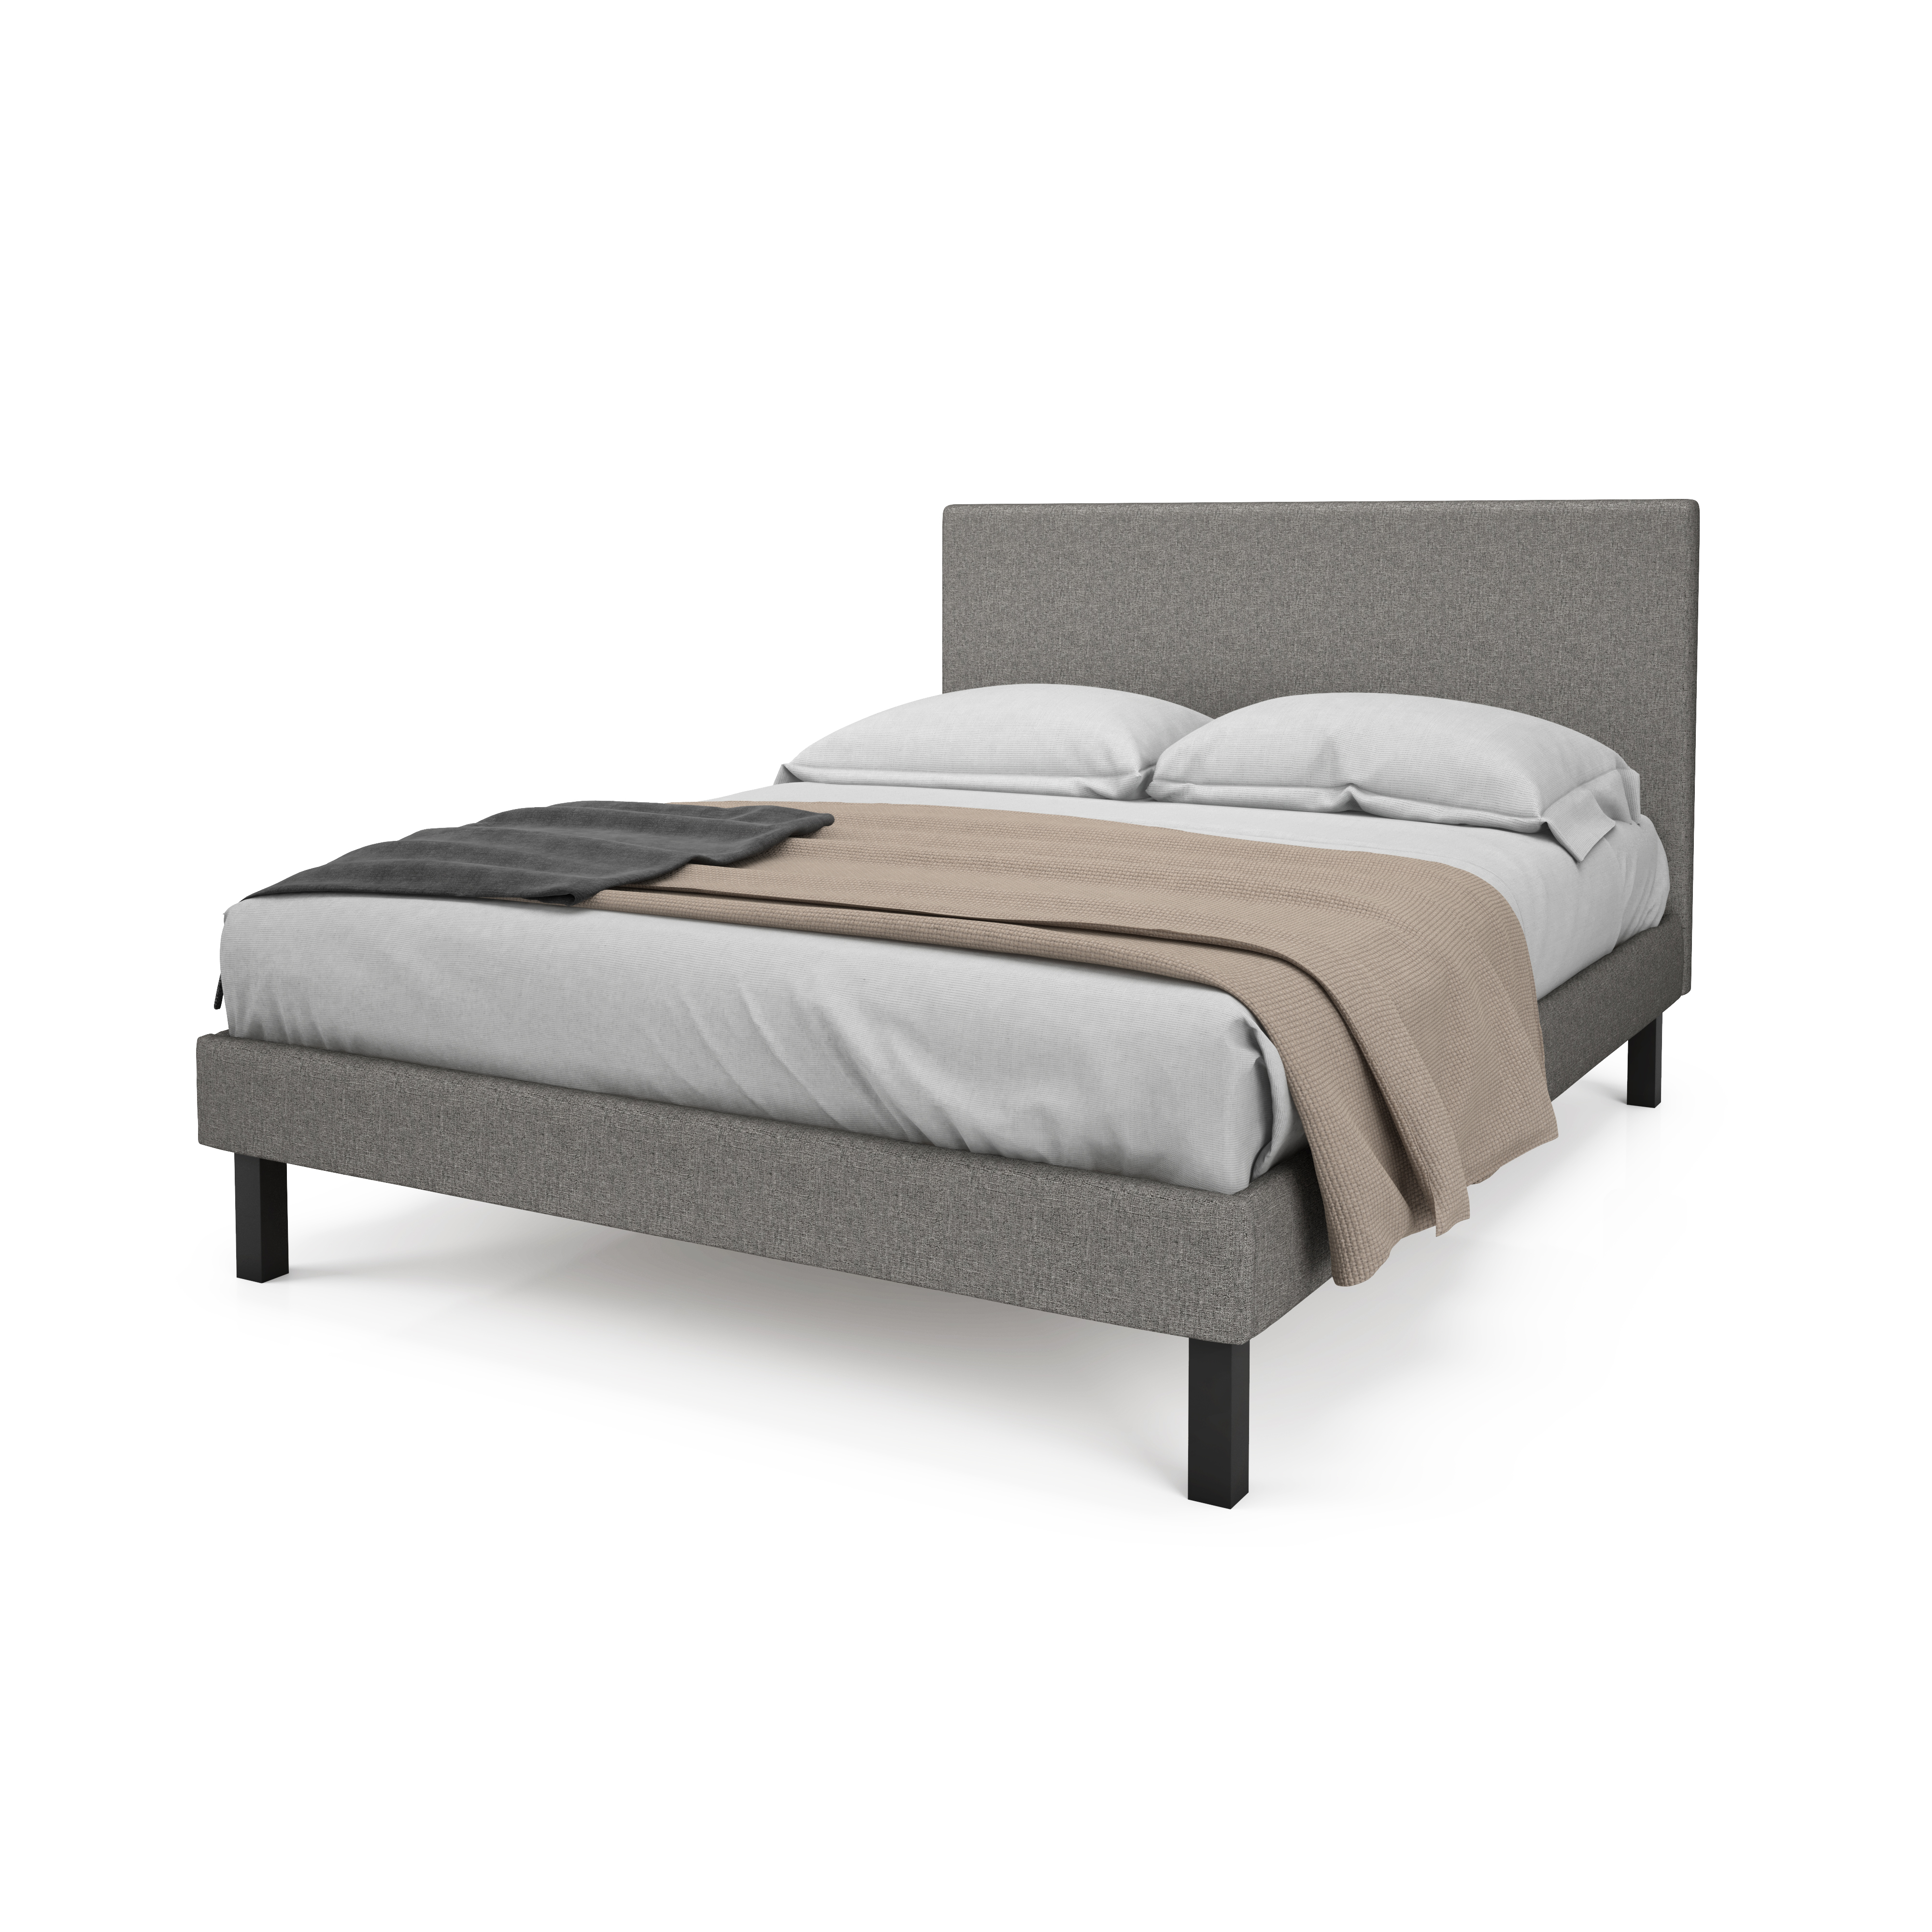 Breeze Platform Bed with Ennis Headboard in Grey